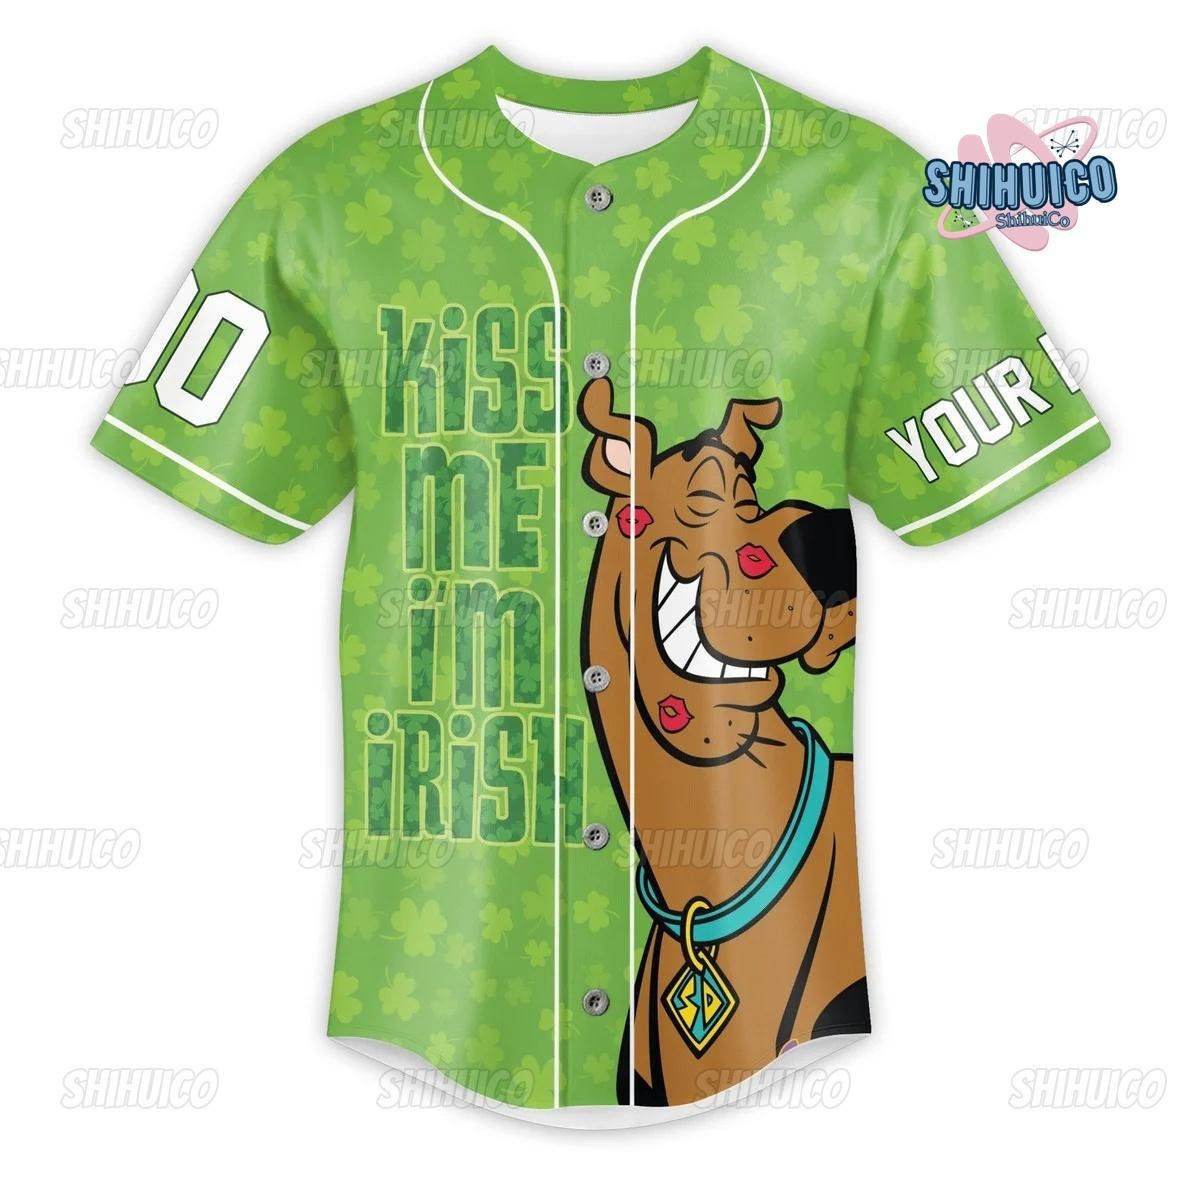 Personalized Scooby Doo Jersey, Scooby Doo Baseball Jersey